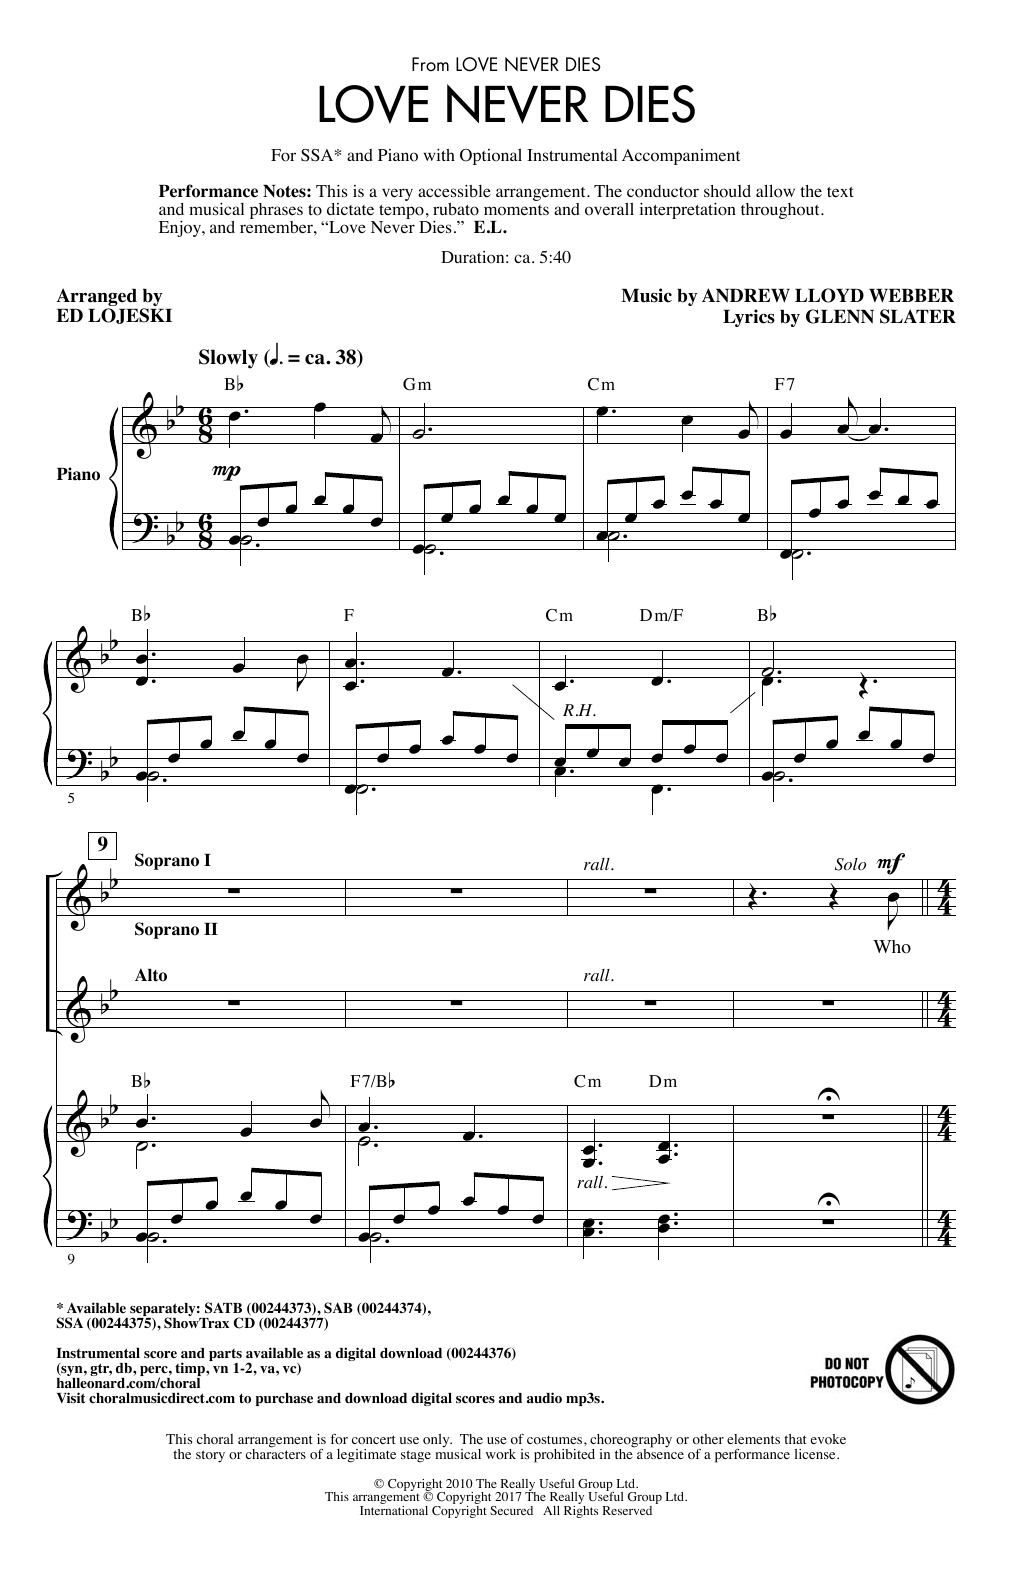 Andrew Lloyd Webber Love Never Dies (arr. Ed Lojeski) Sheet Music Notes & Chords for SATB - Download or Print PDF